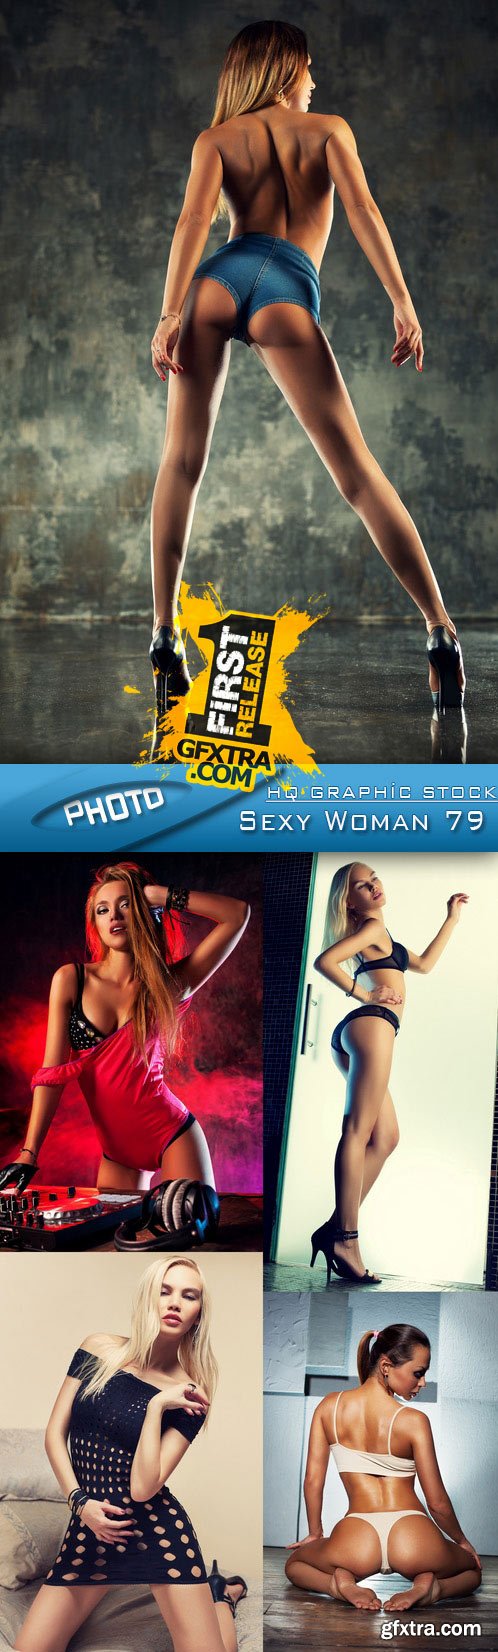 Stock Photo - Sexy Woman 79